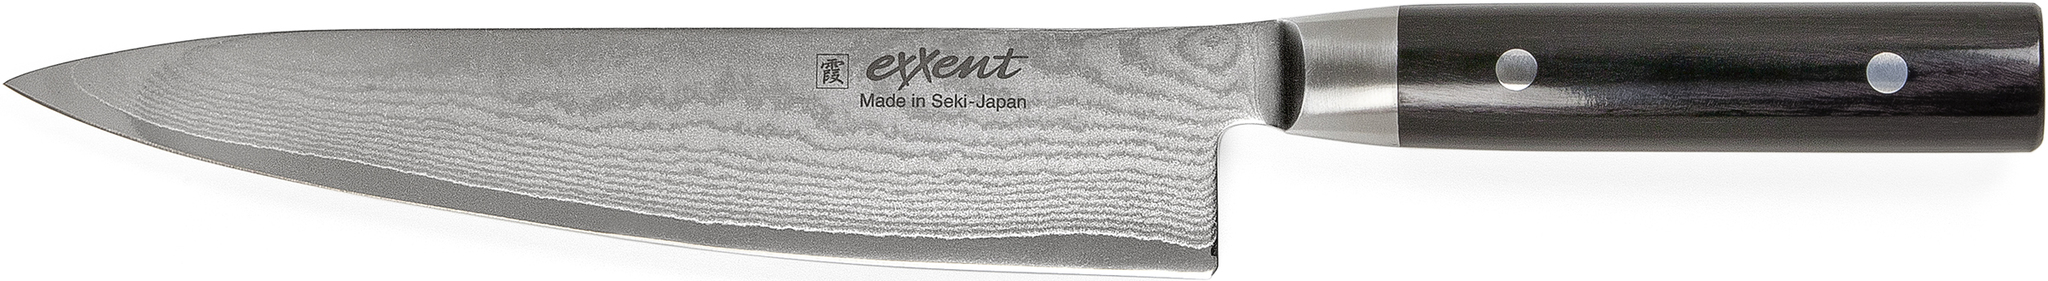 Kockkniv kasumi från Exxent